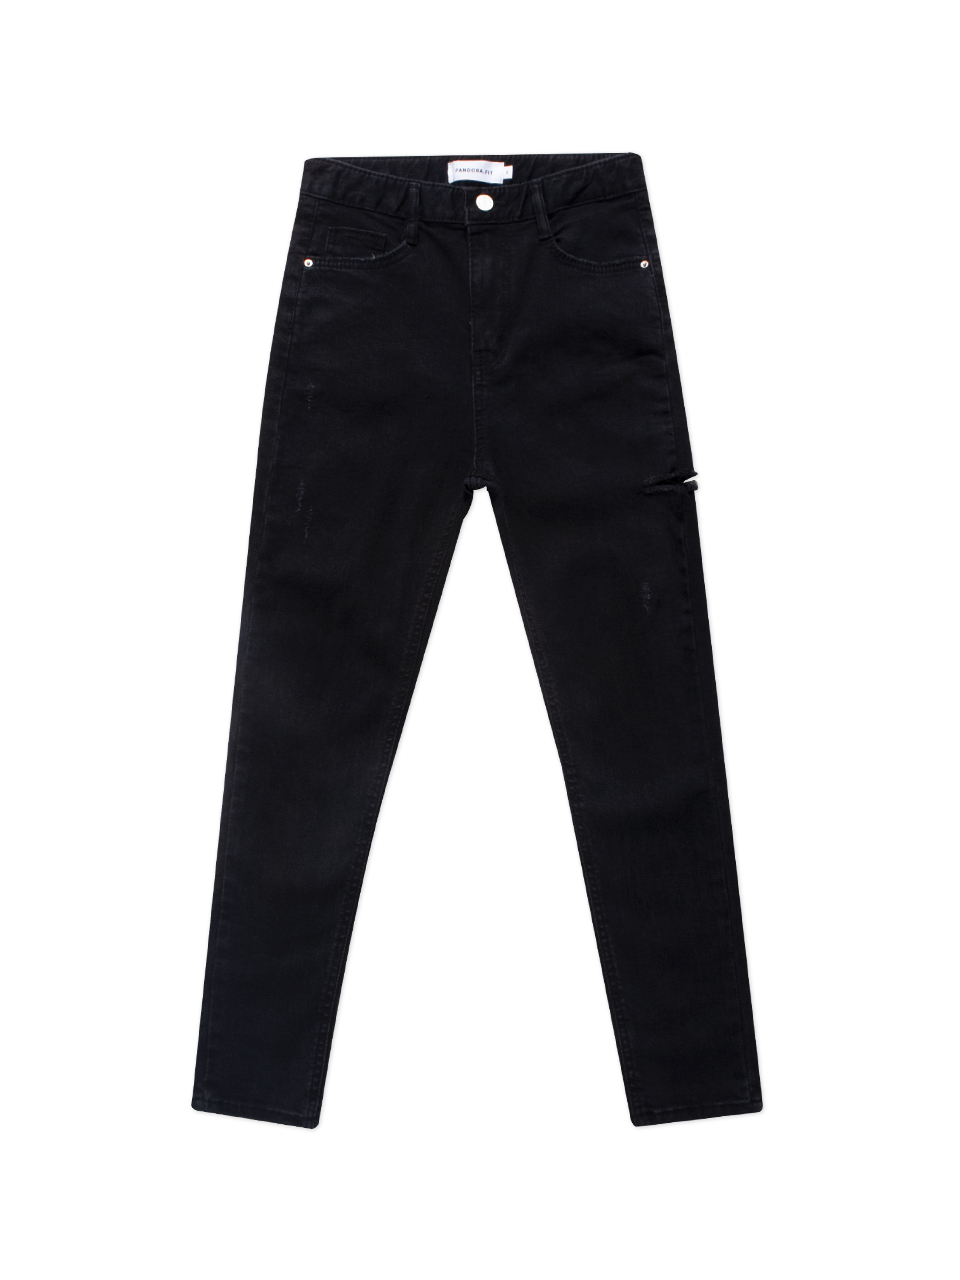 [BOOTSCUT] Black Hole Jeans